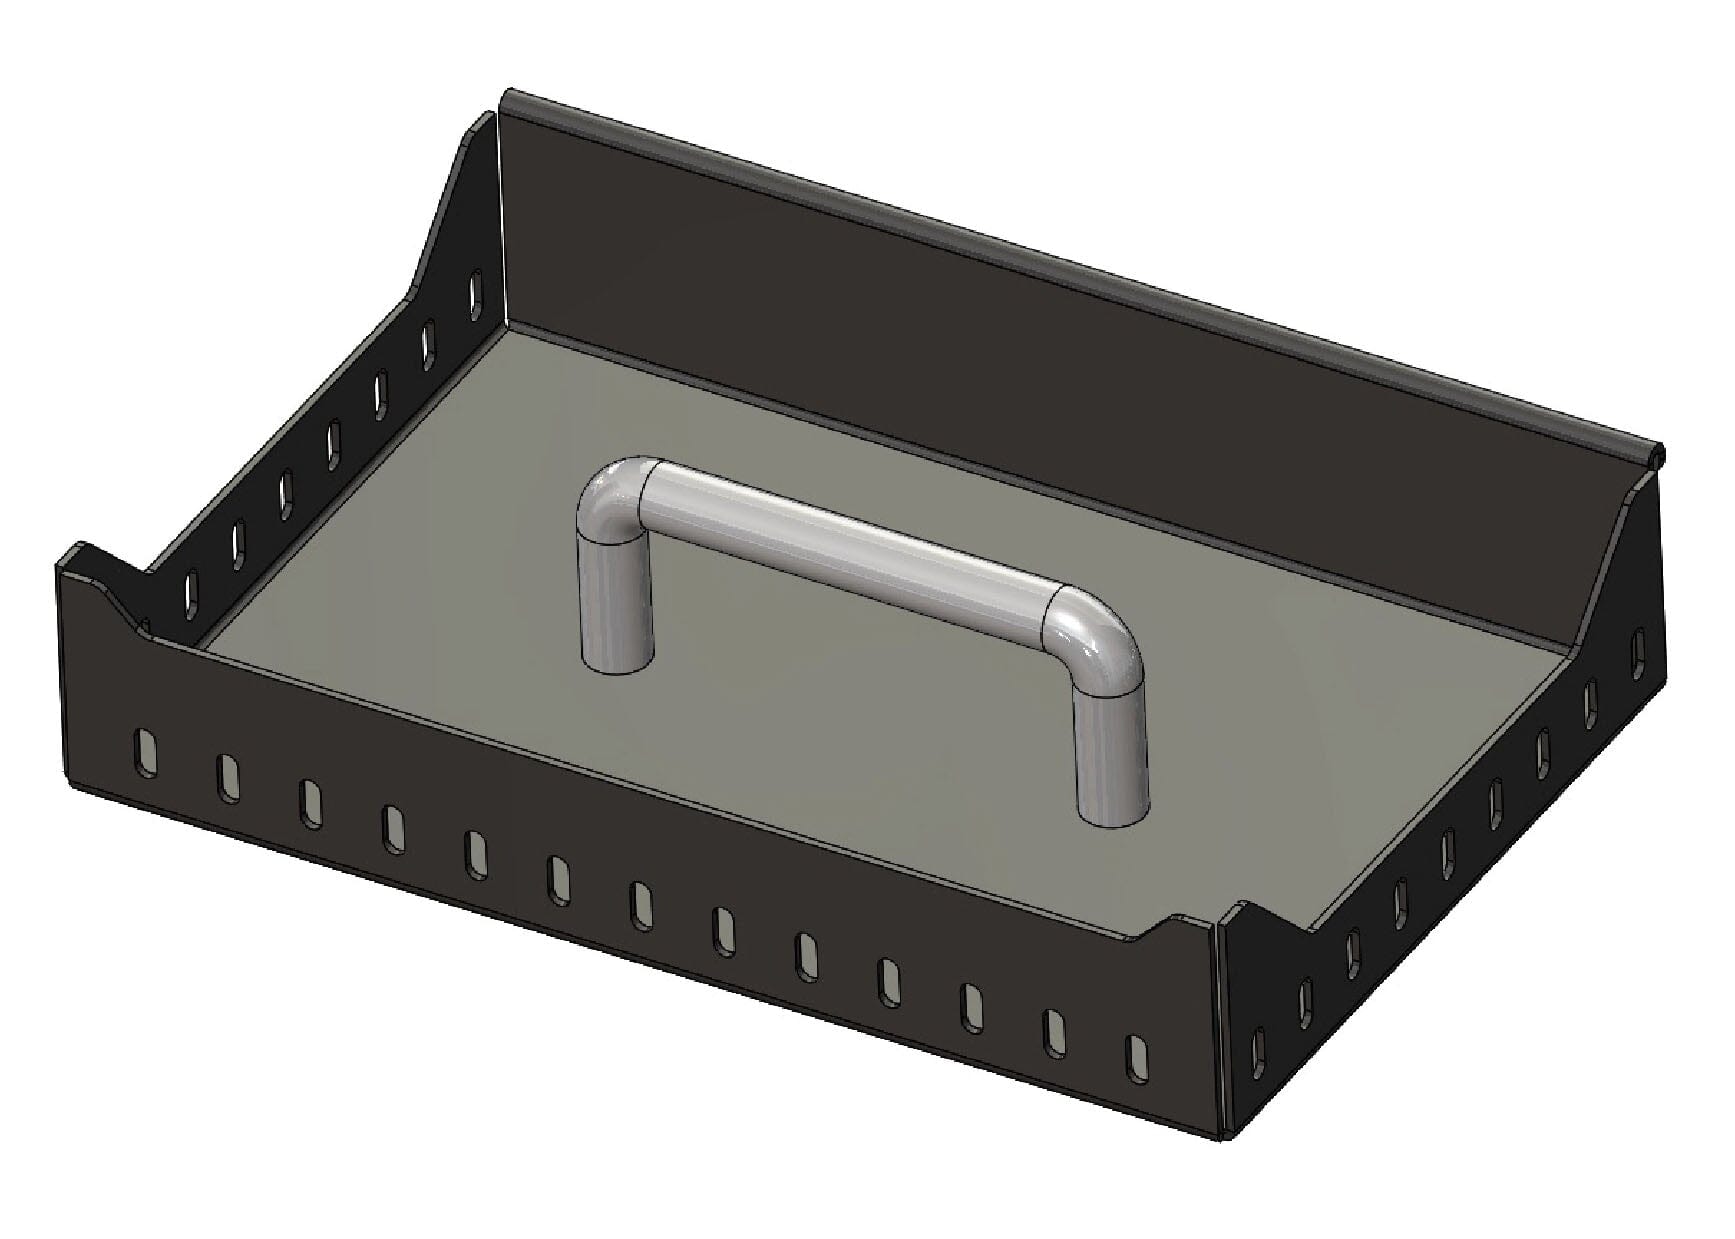 ADAPT Truck tool box tray